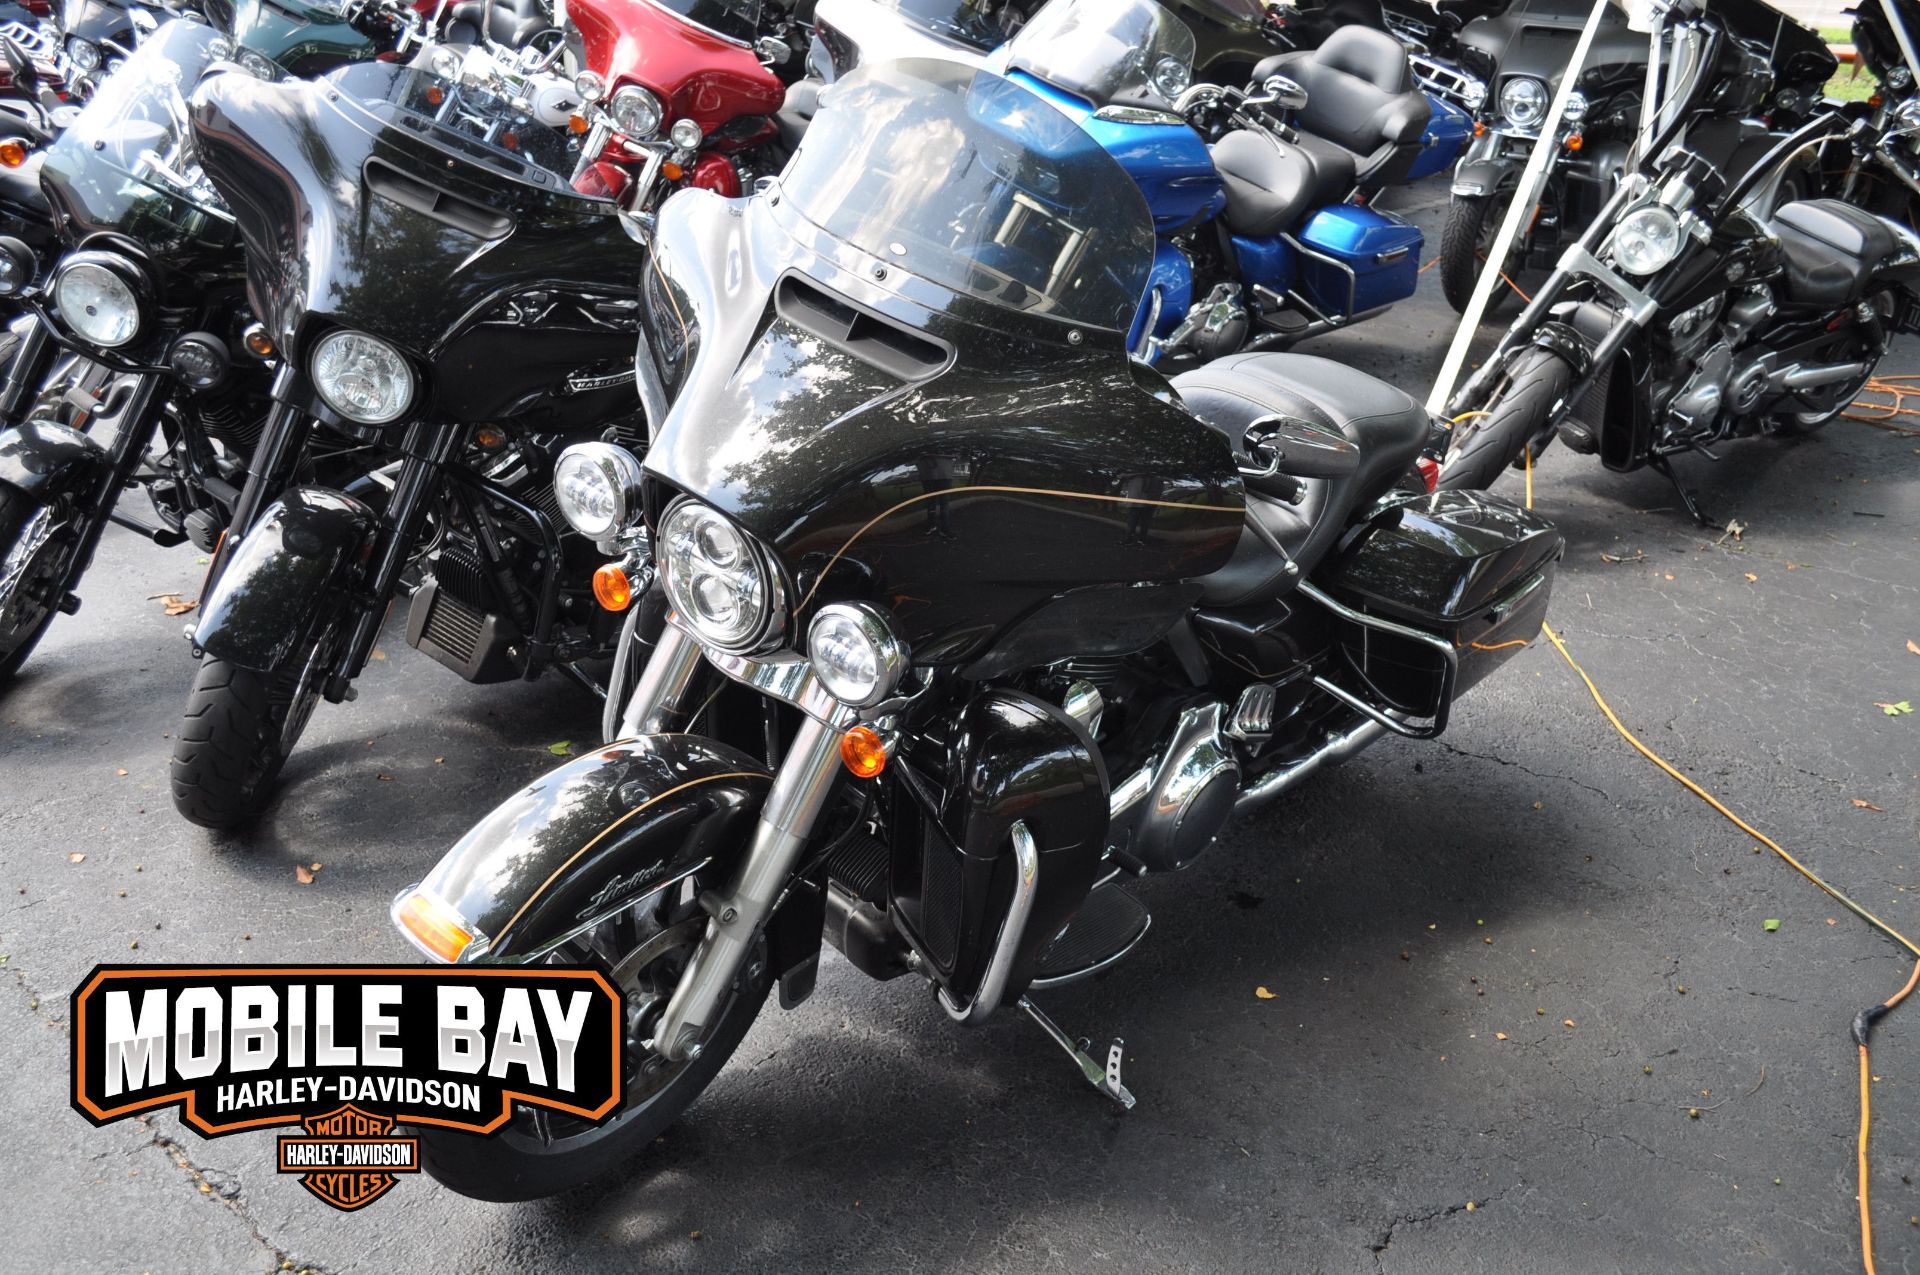 2016 Harley-Davidson Ultra Limited Low in Mobile, Alabama - Photo 6